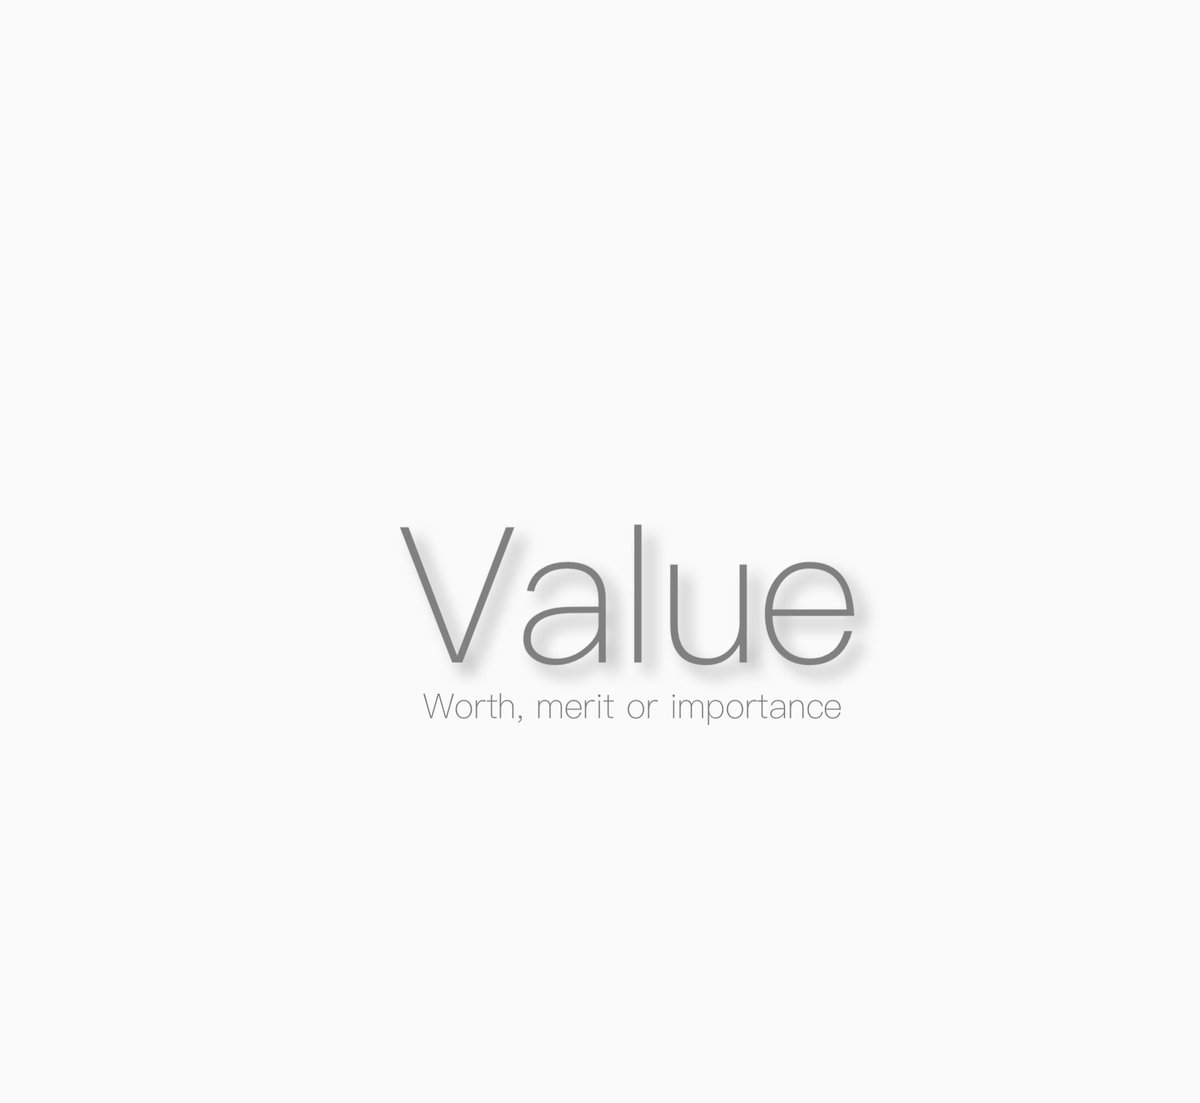 'Value' #wordoftheday #words #saying #wordsandsayings #life #message #realtalk #motivation #inspiration #inspirational #wordsdaily #wordsandmeanings #fyp